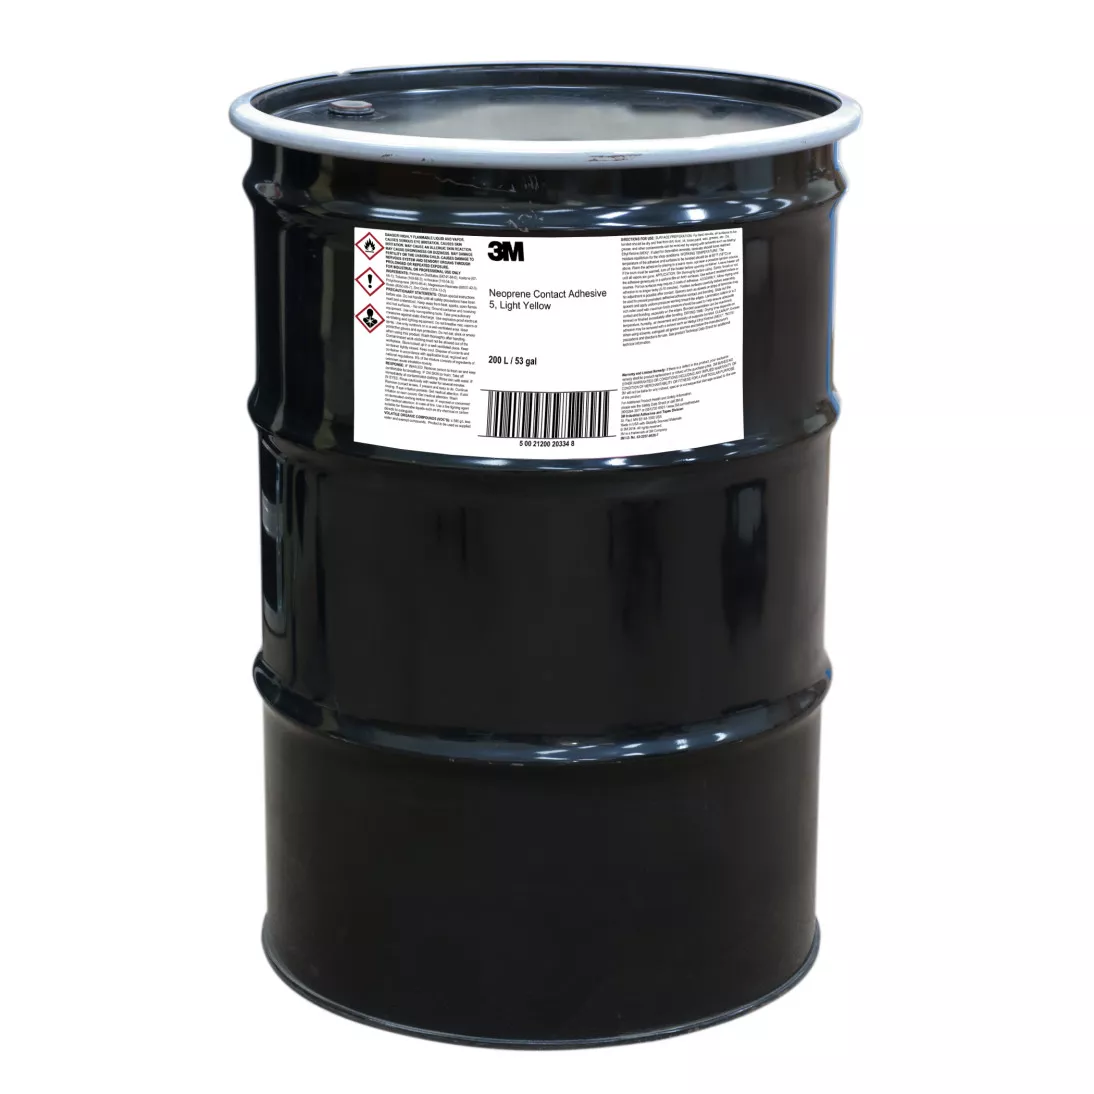 3M™ Neoprene Contact Adhesive 5, Light Yellow, 55 Gallon Agitator Drum
(53 Gallon Net)